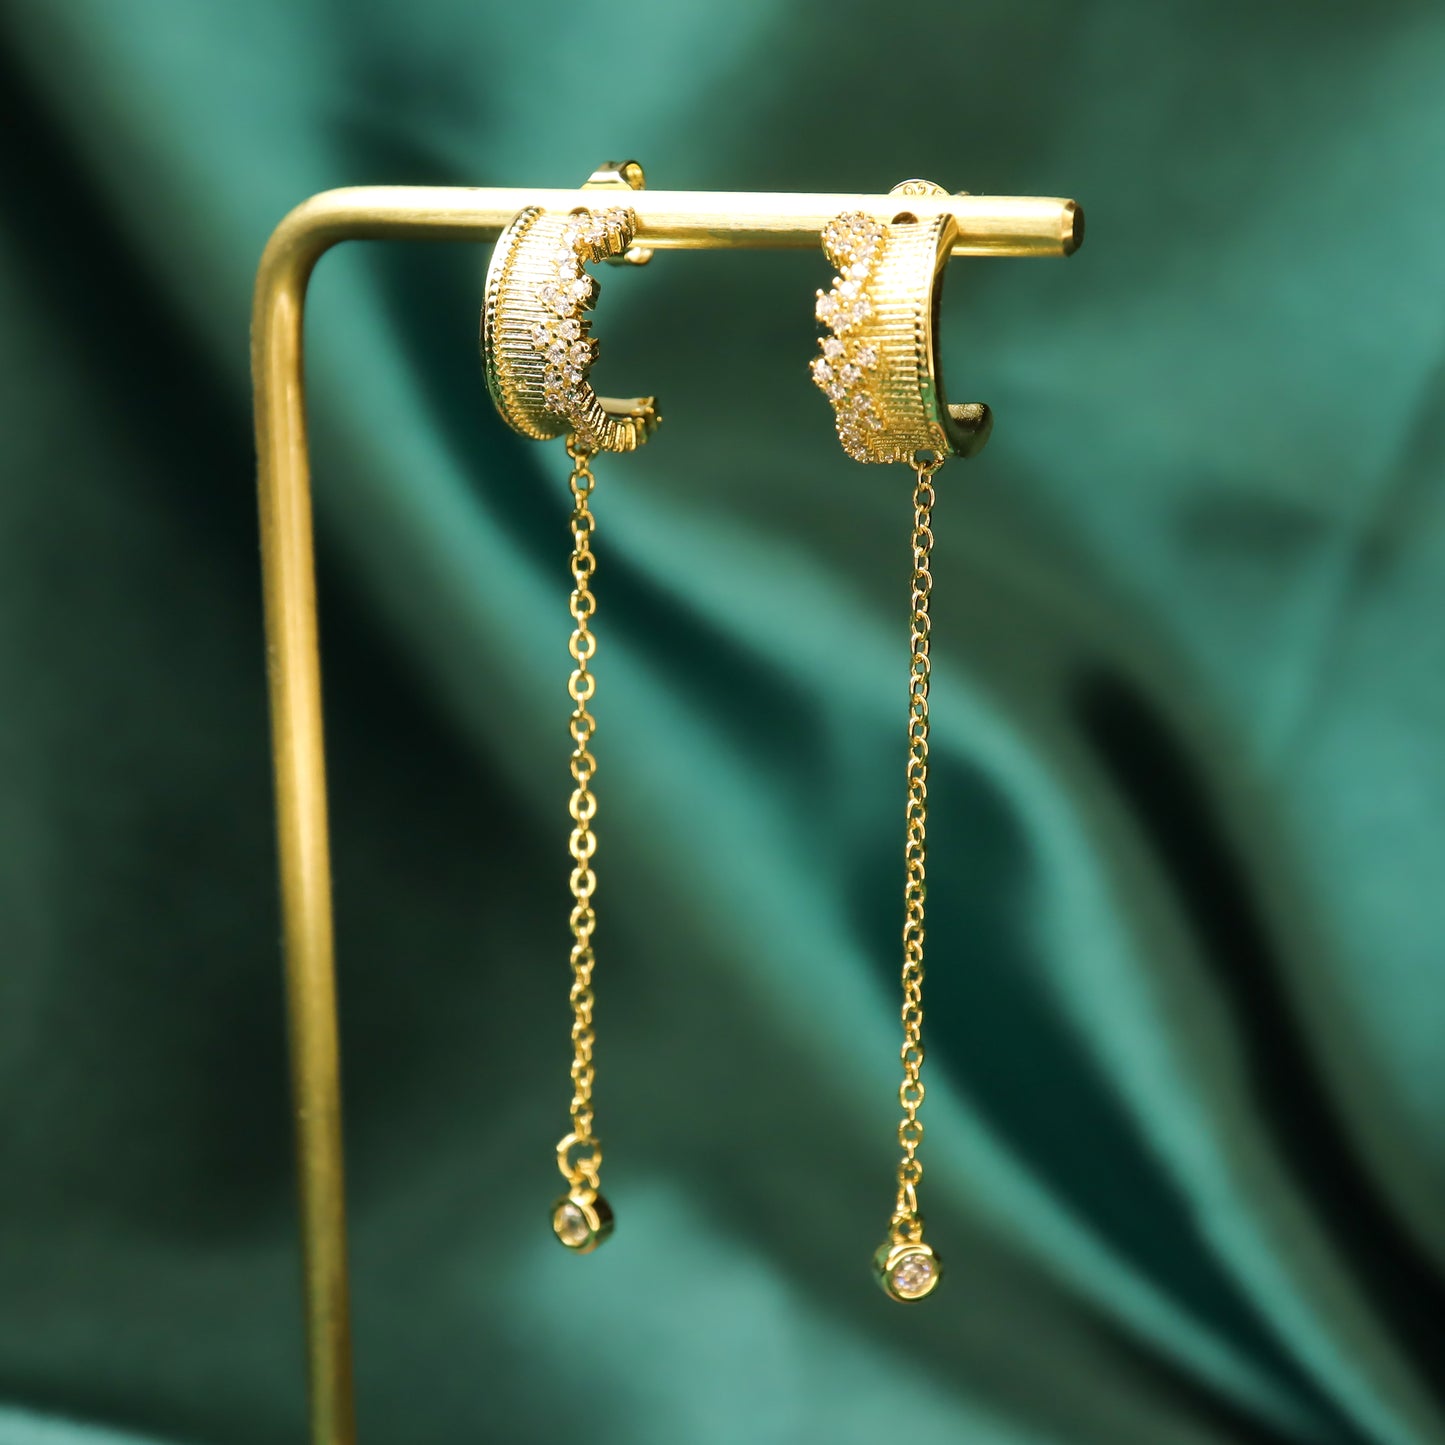 Starry Crown - 18K Gold Plated S925 Sterling Silver Vintage Tassel Earrings